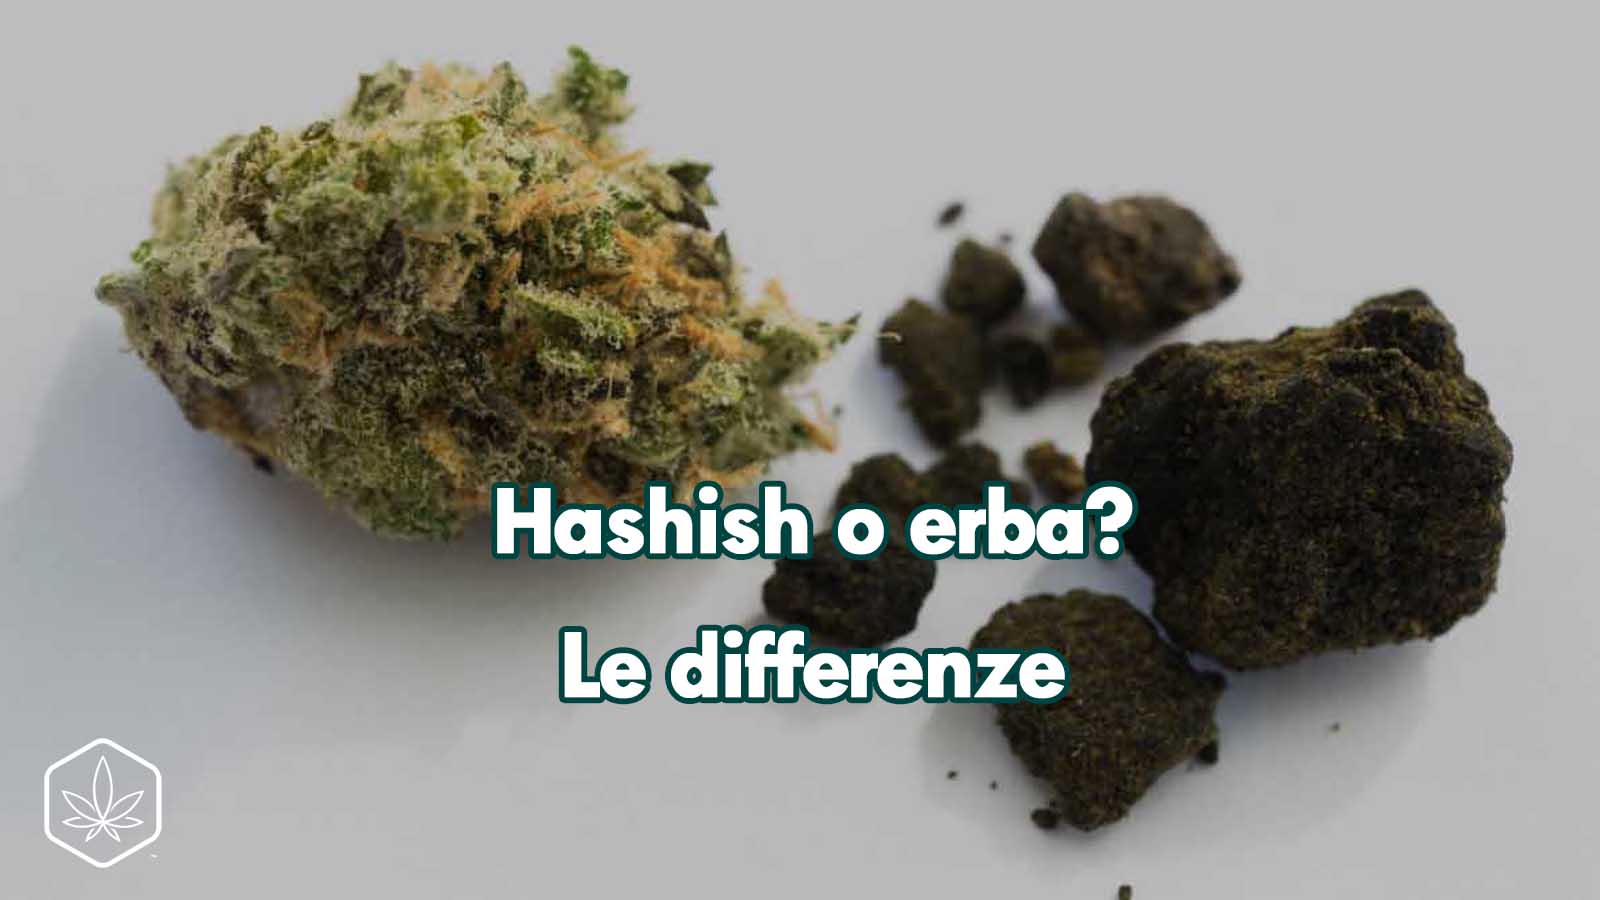 Hashish o erba CBD? Le differenze - Hemp Embassy - Cannabis Light